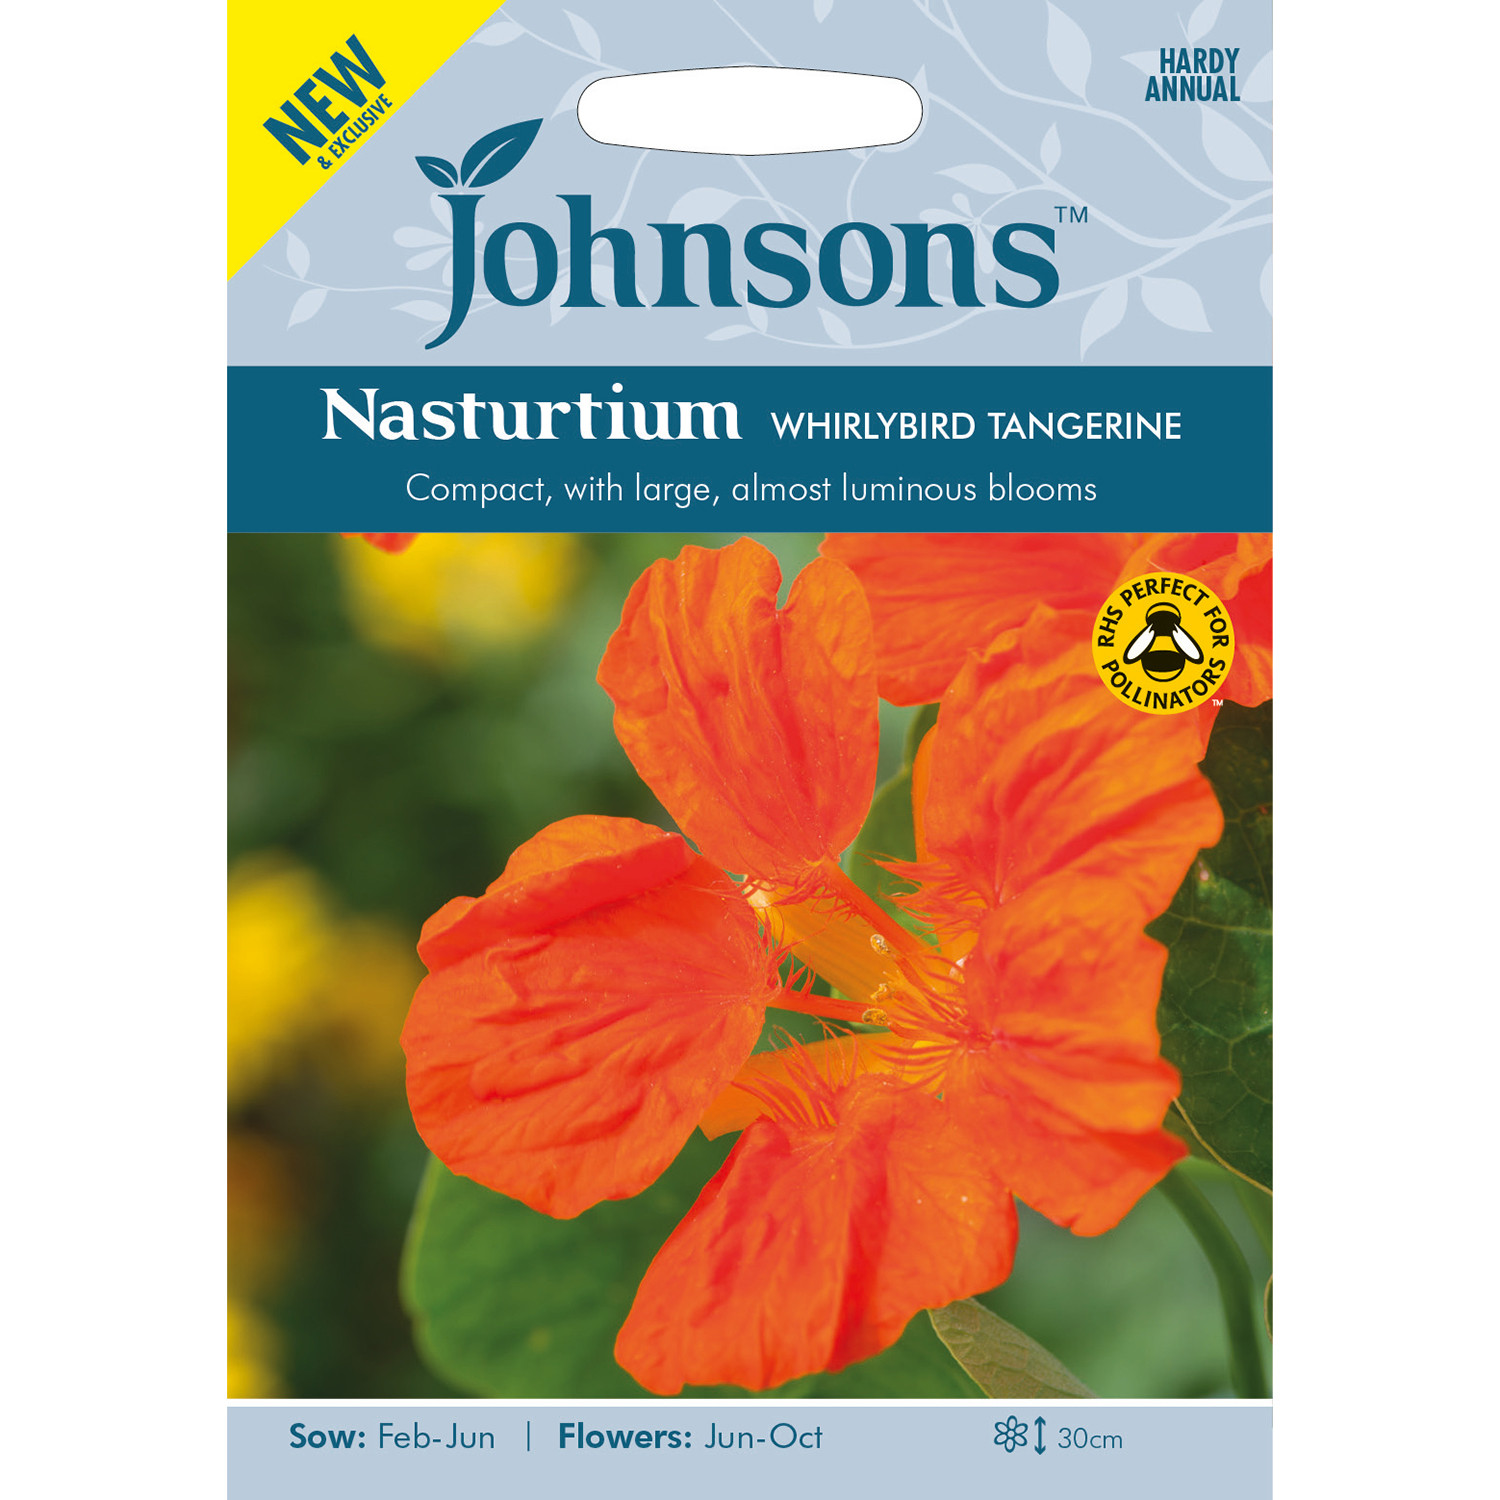 Johnsons Nasturtium Whirlybird Tangerine Flower Seeds Image 2